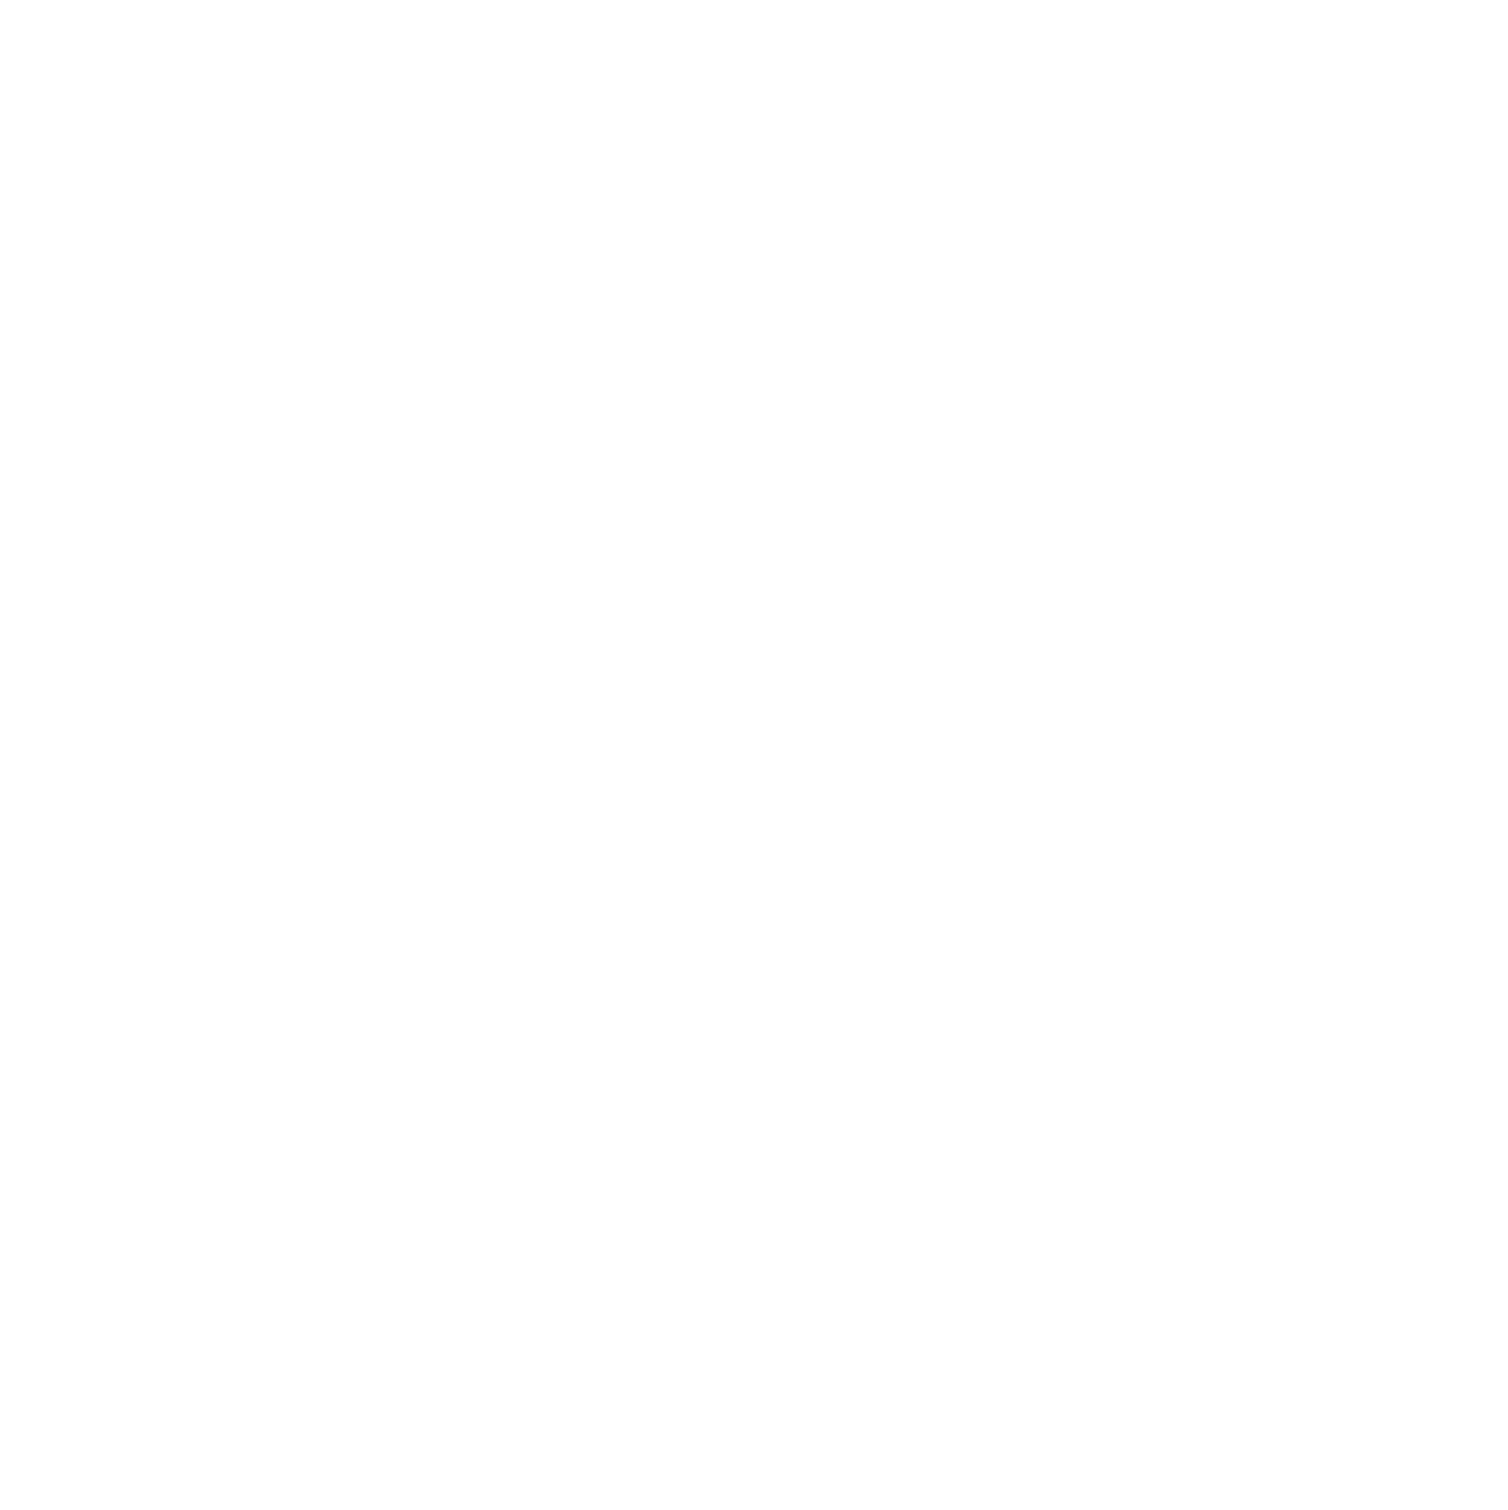 PropertyGuru logo pour fonds sombres (PNG transparent)